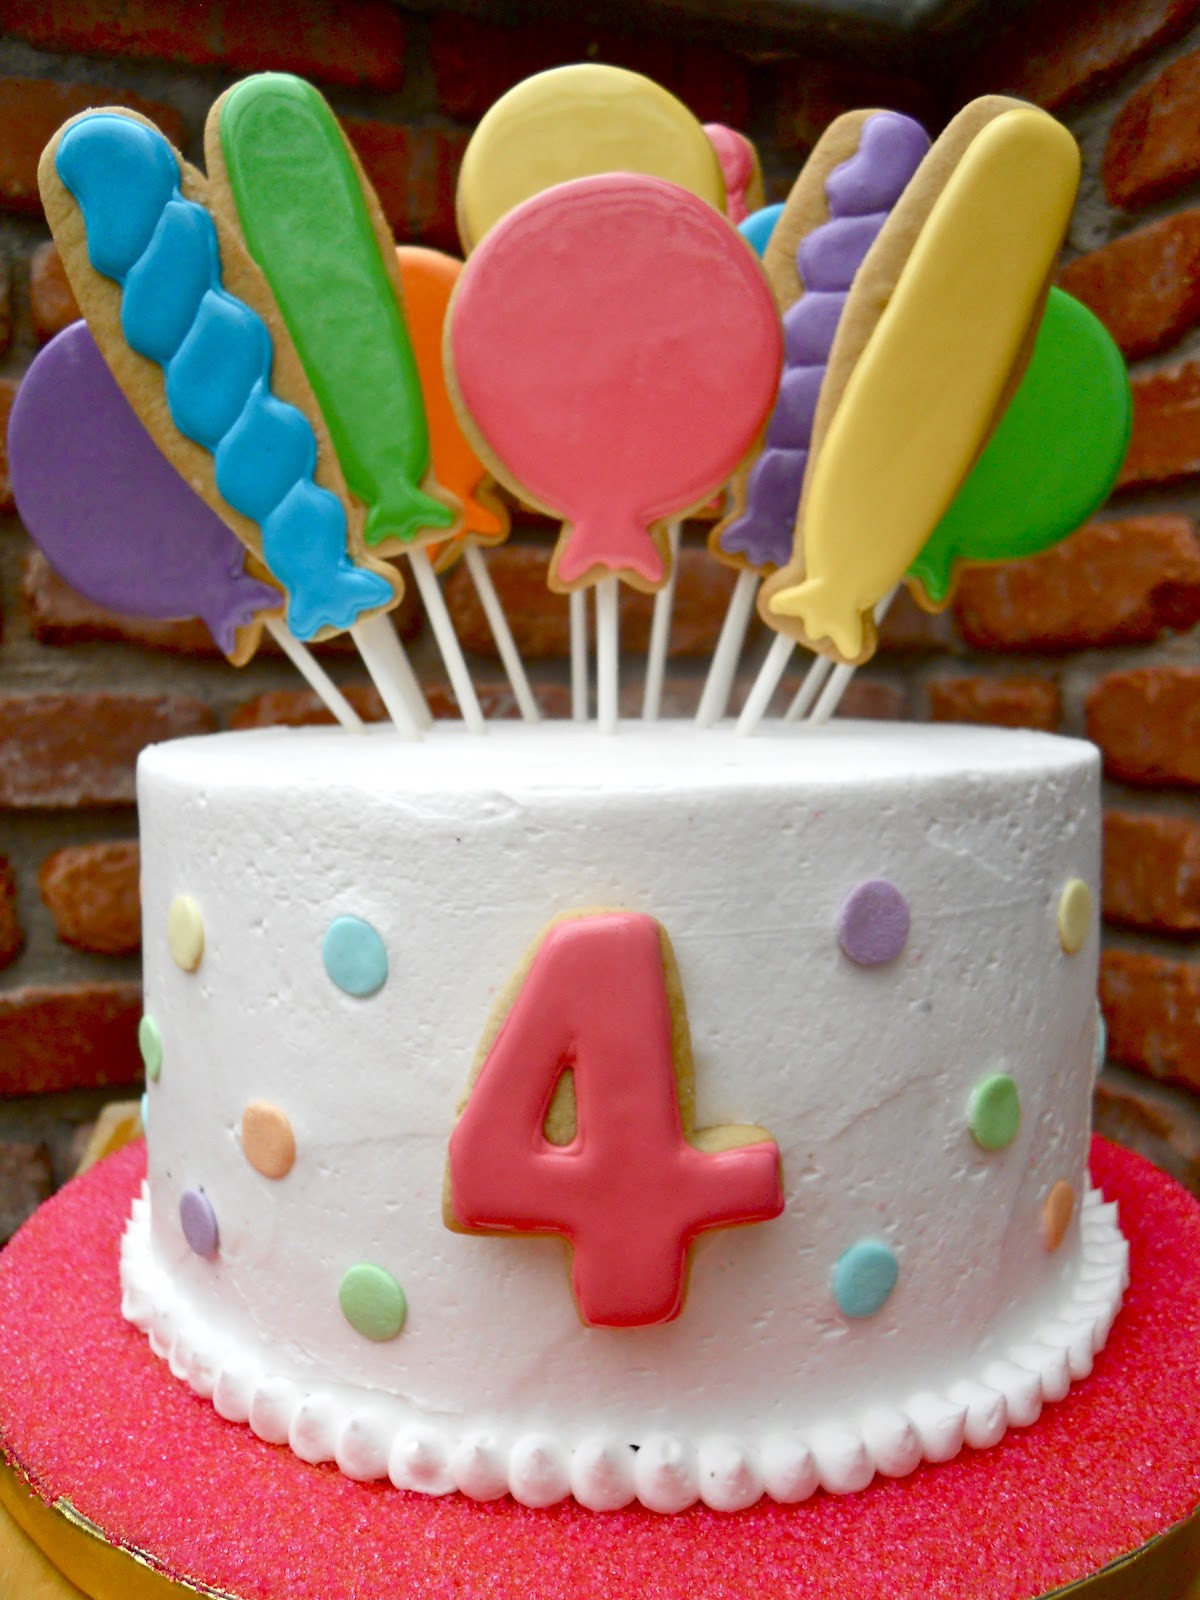 Birthday Balloons And Cake
 Oh Sugar Events Balloon Birthday Cake